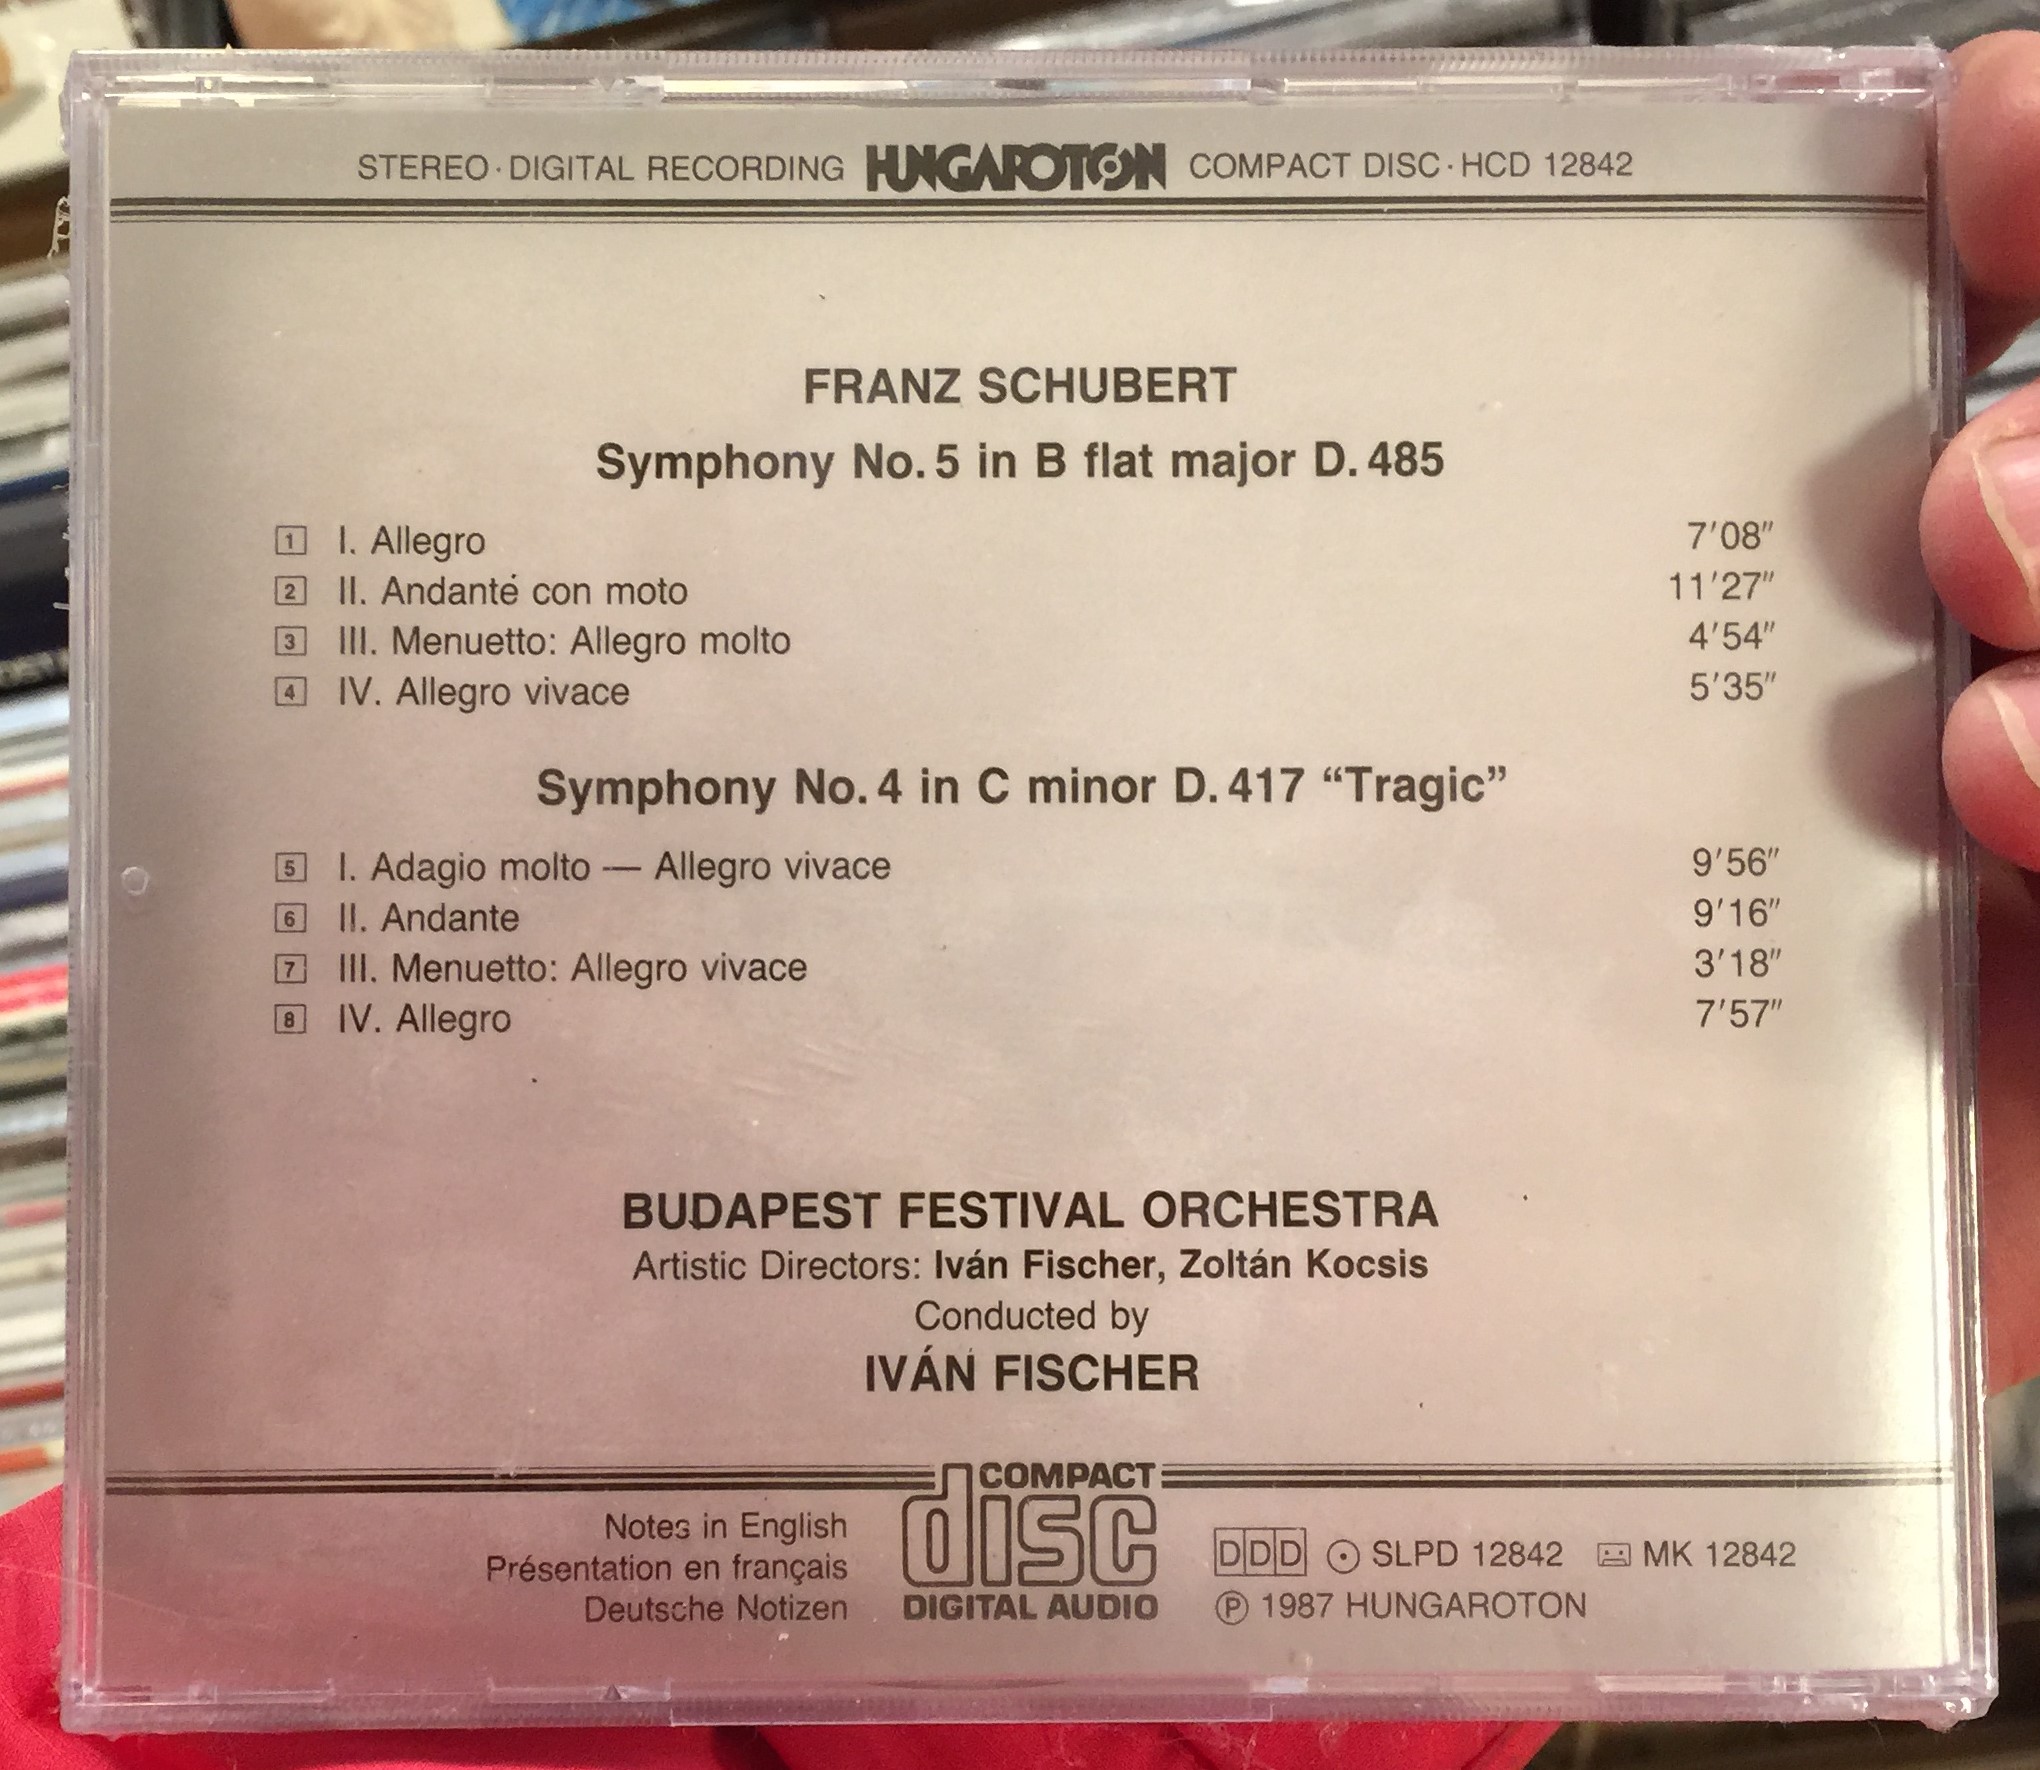 schubert-symphonies-no.5-in-b-flat-major-no.4-in-c-minor-tragic-budapest-festival-orchestra-ivan-fischer-hungaroton-audio-cd-1987-stereo-hcd-12842-2-.jpg